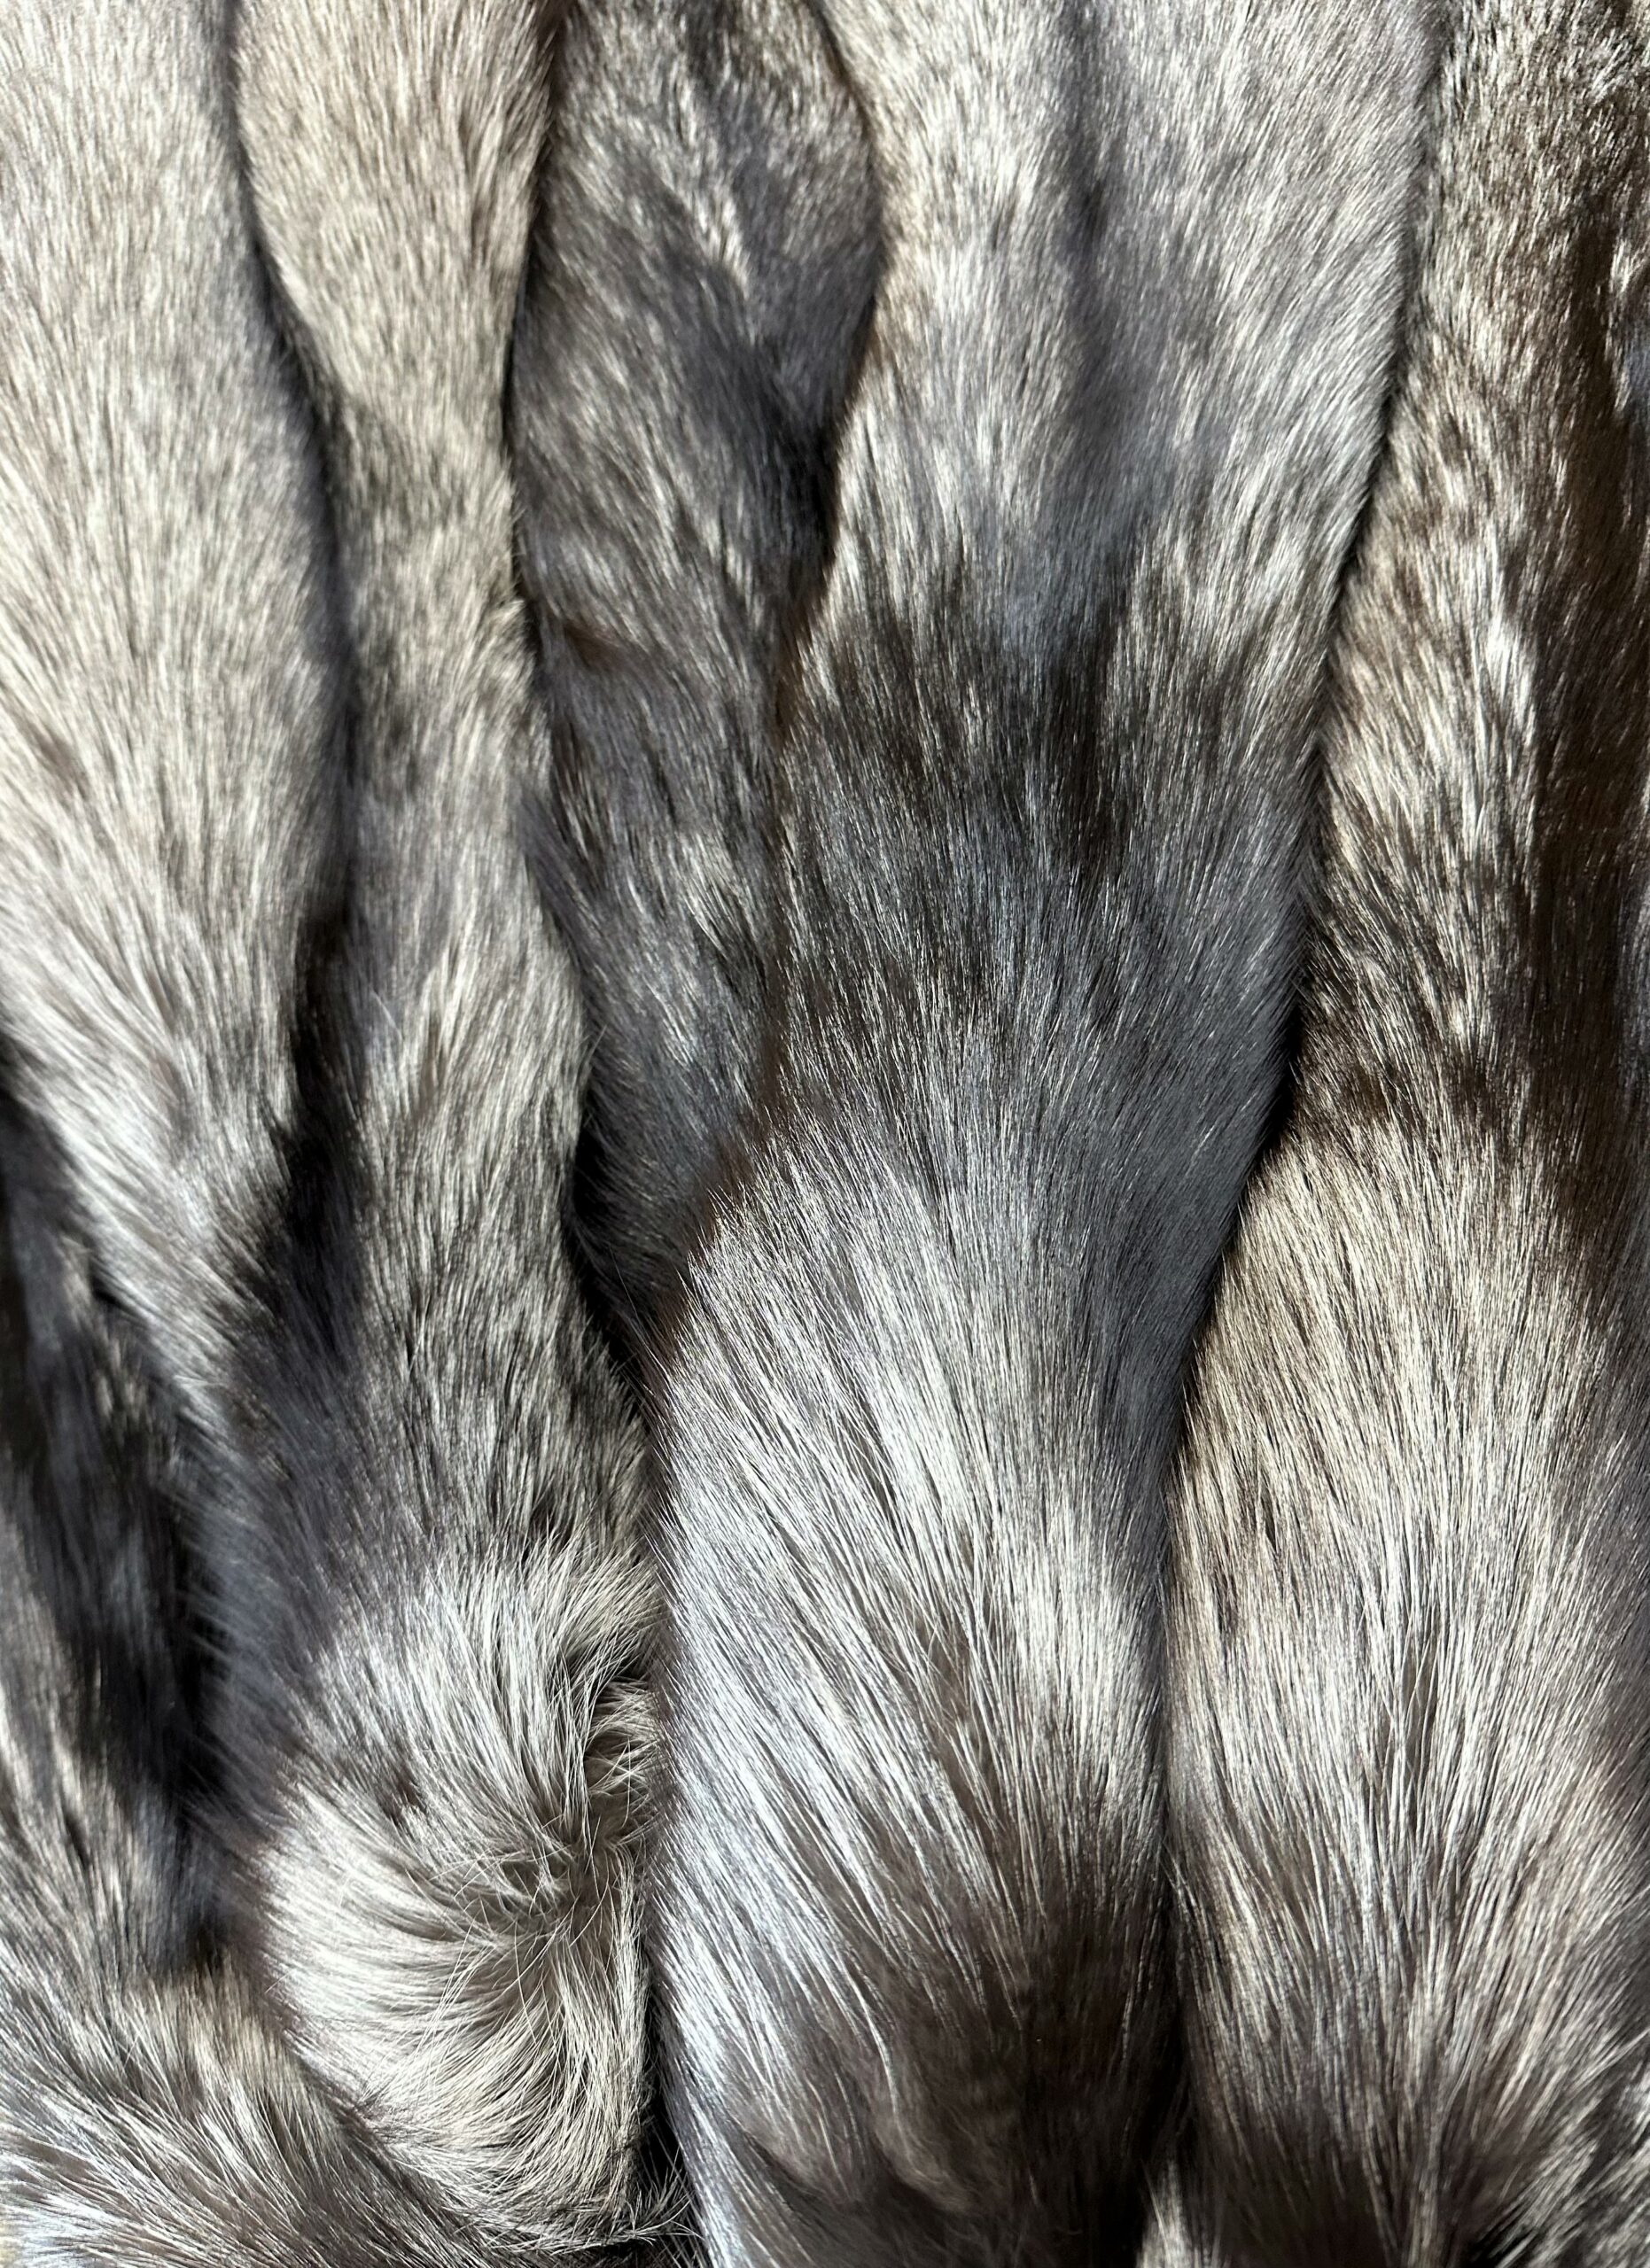 Natural silver fox furs